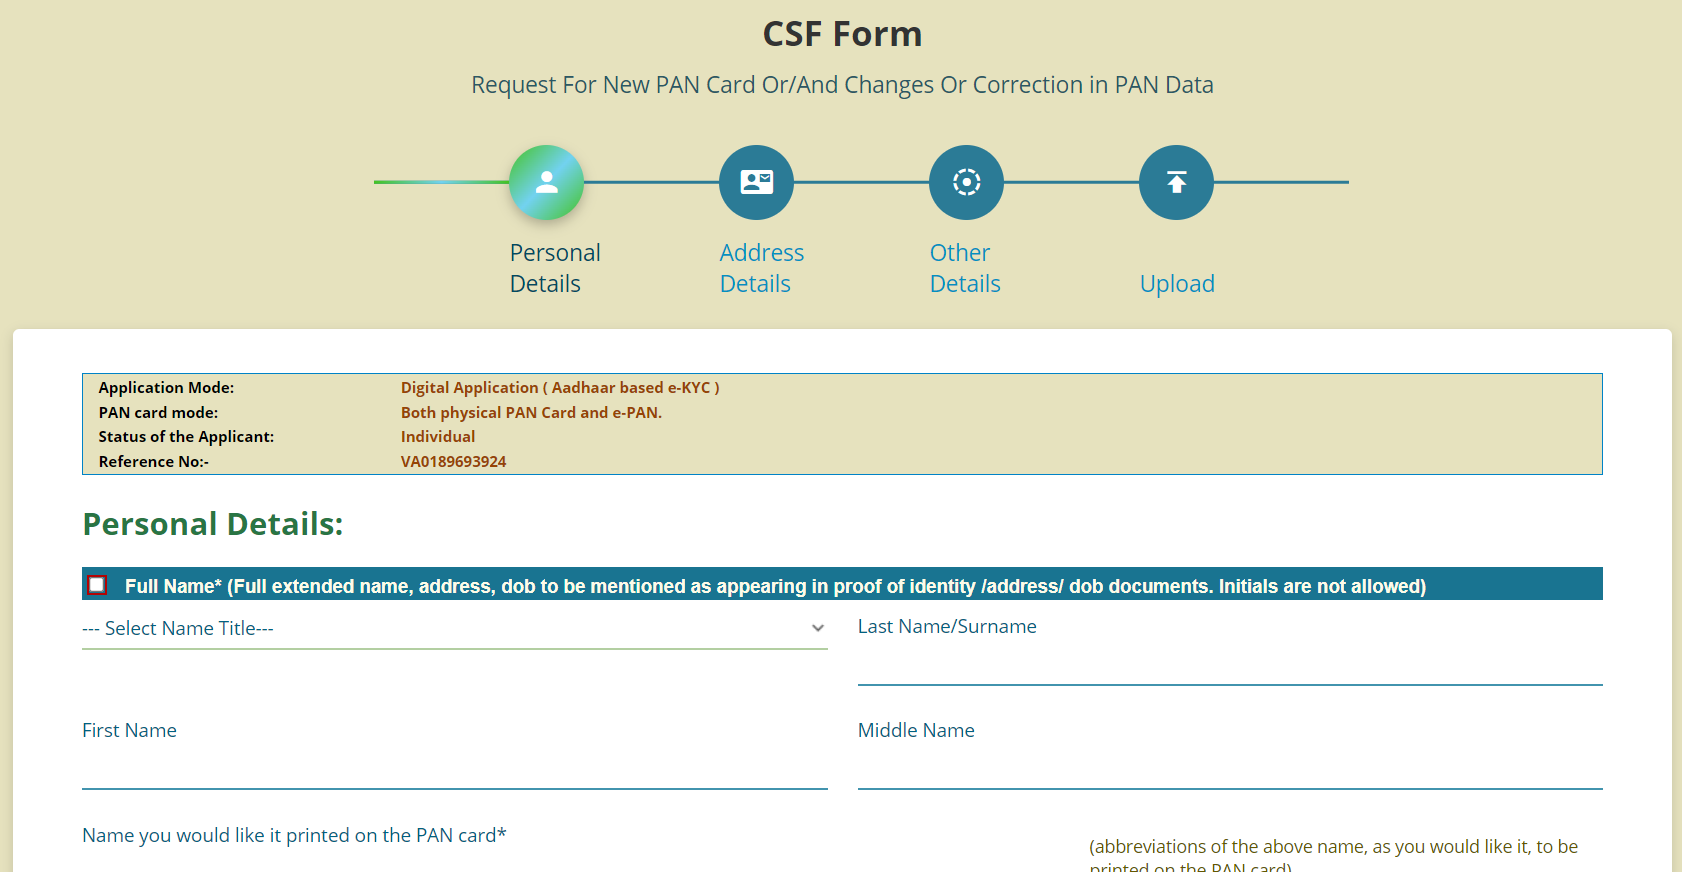 CSF Form